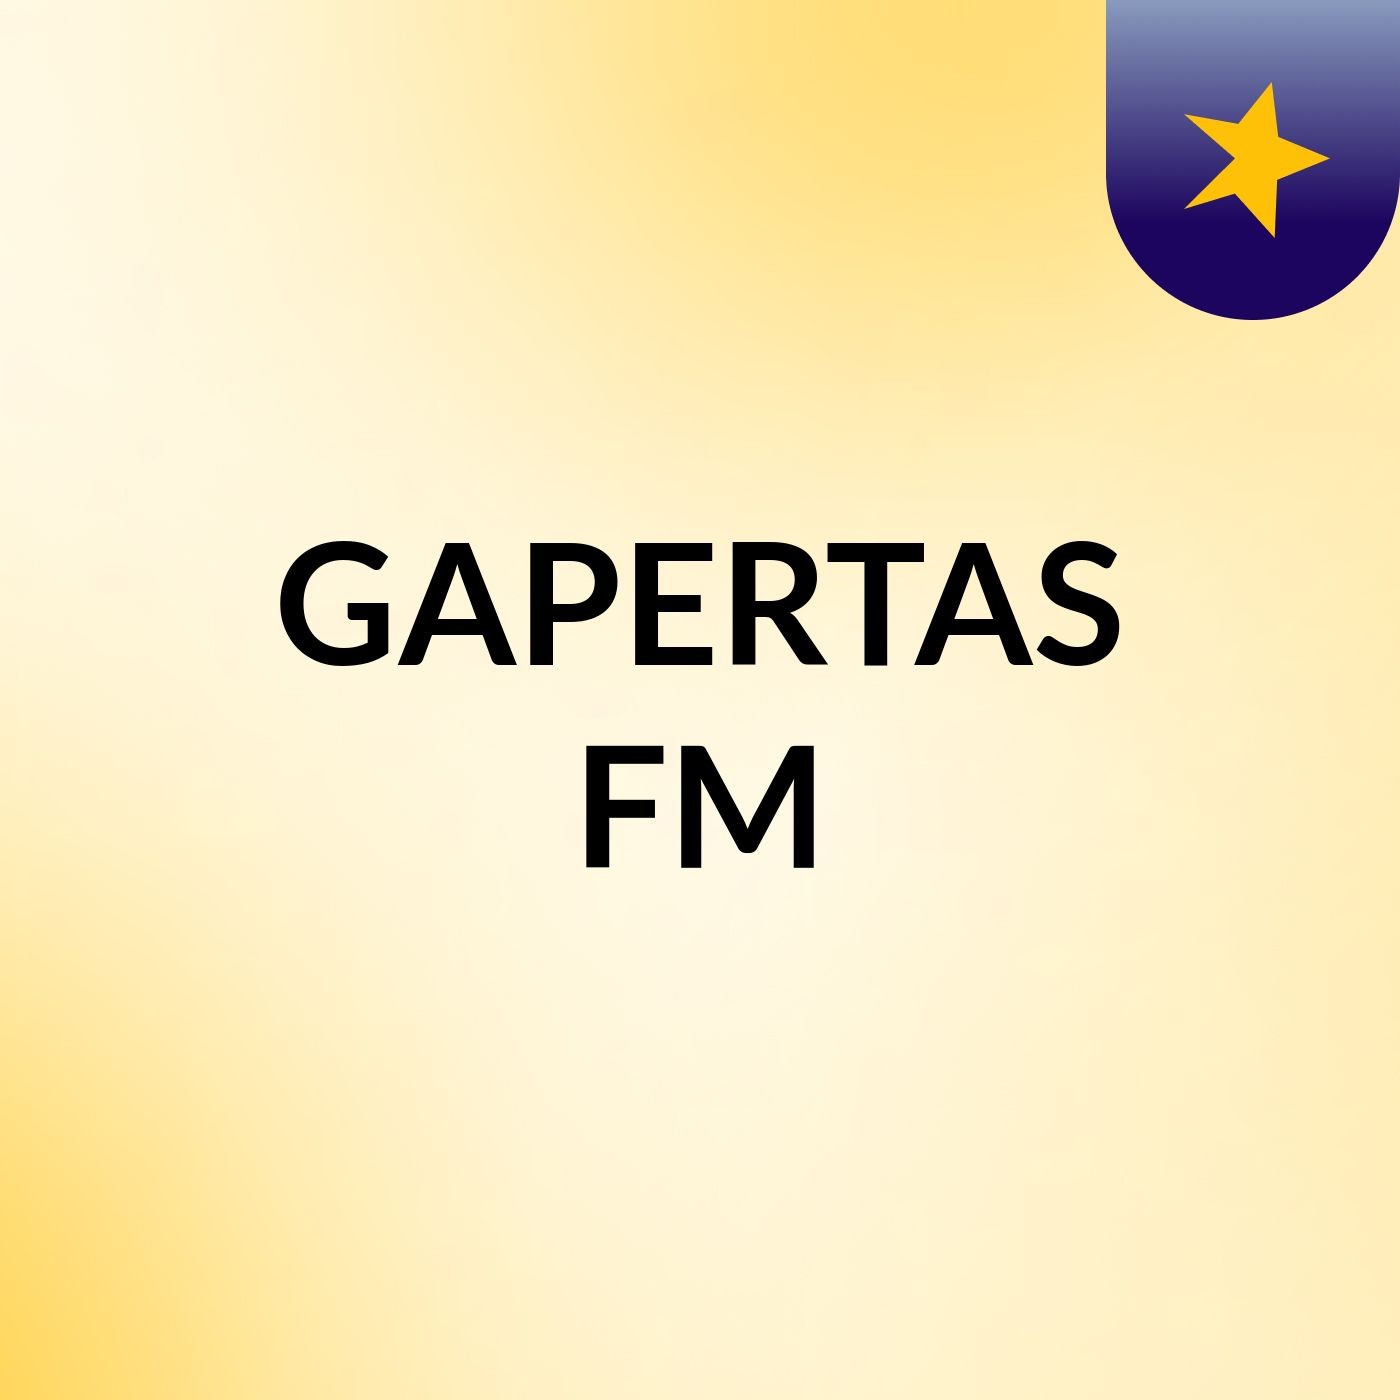 GAPERTAS FM